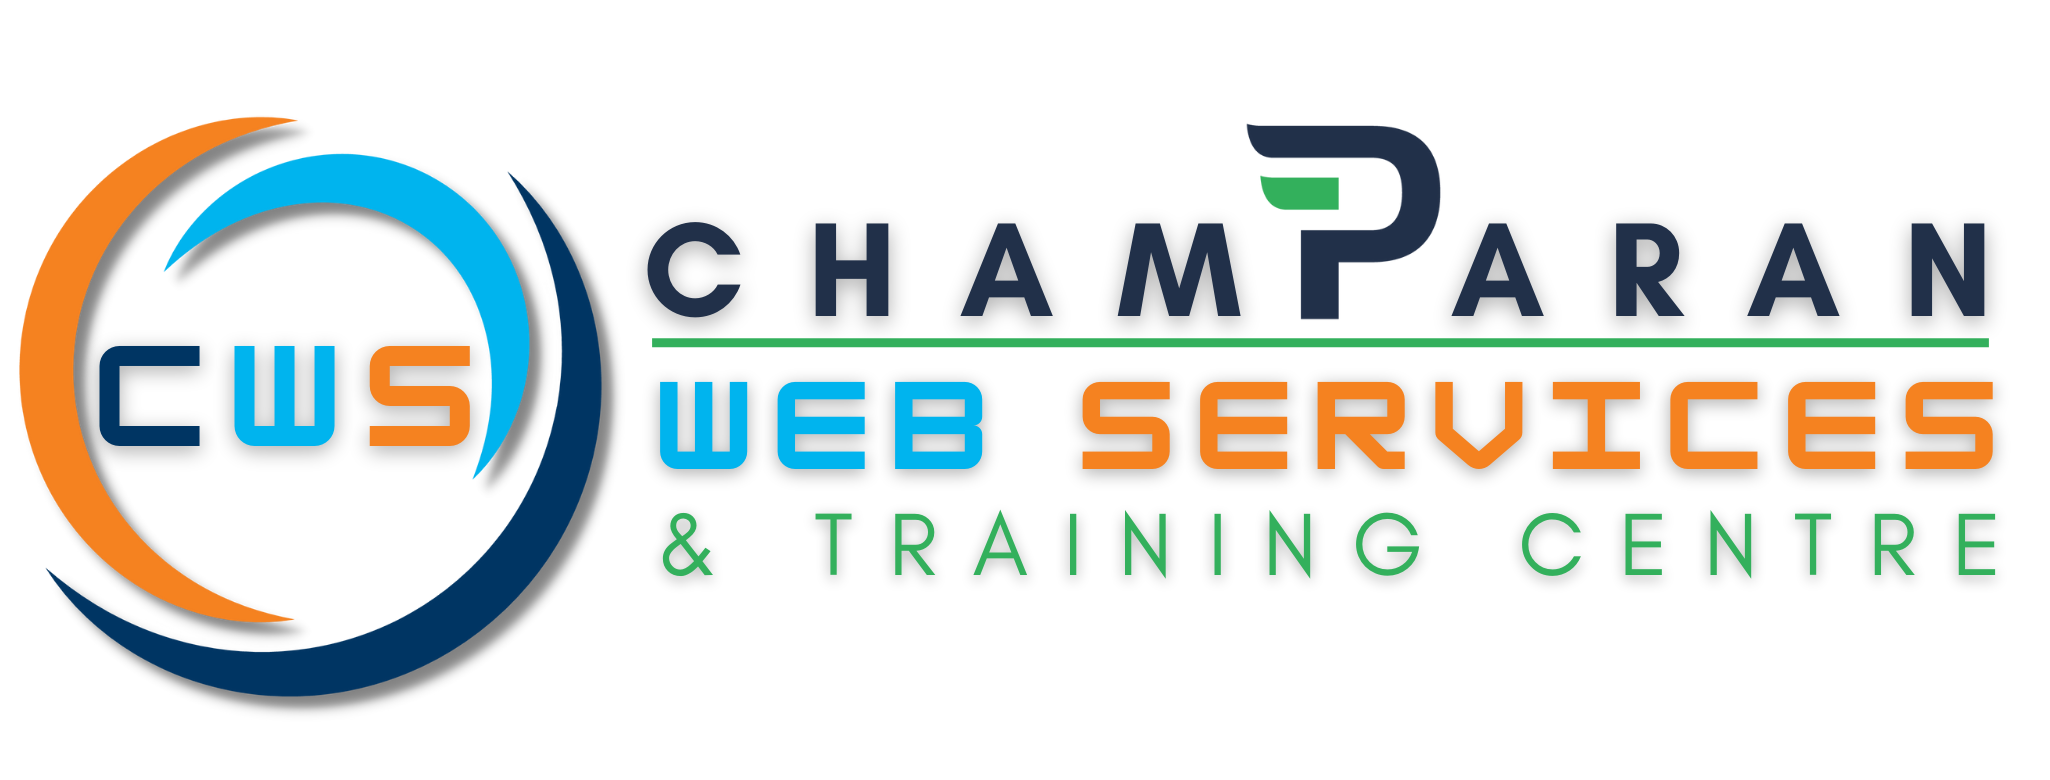 Champaran-Web-Services